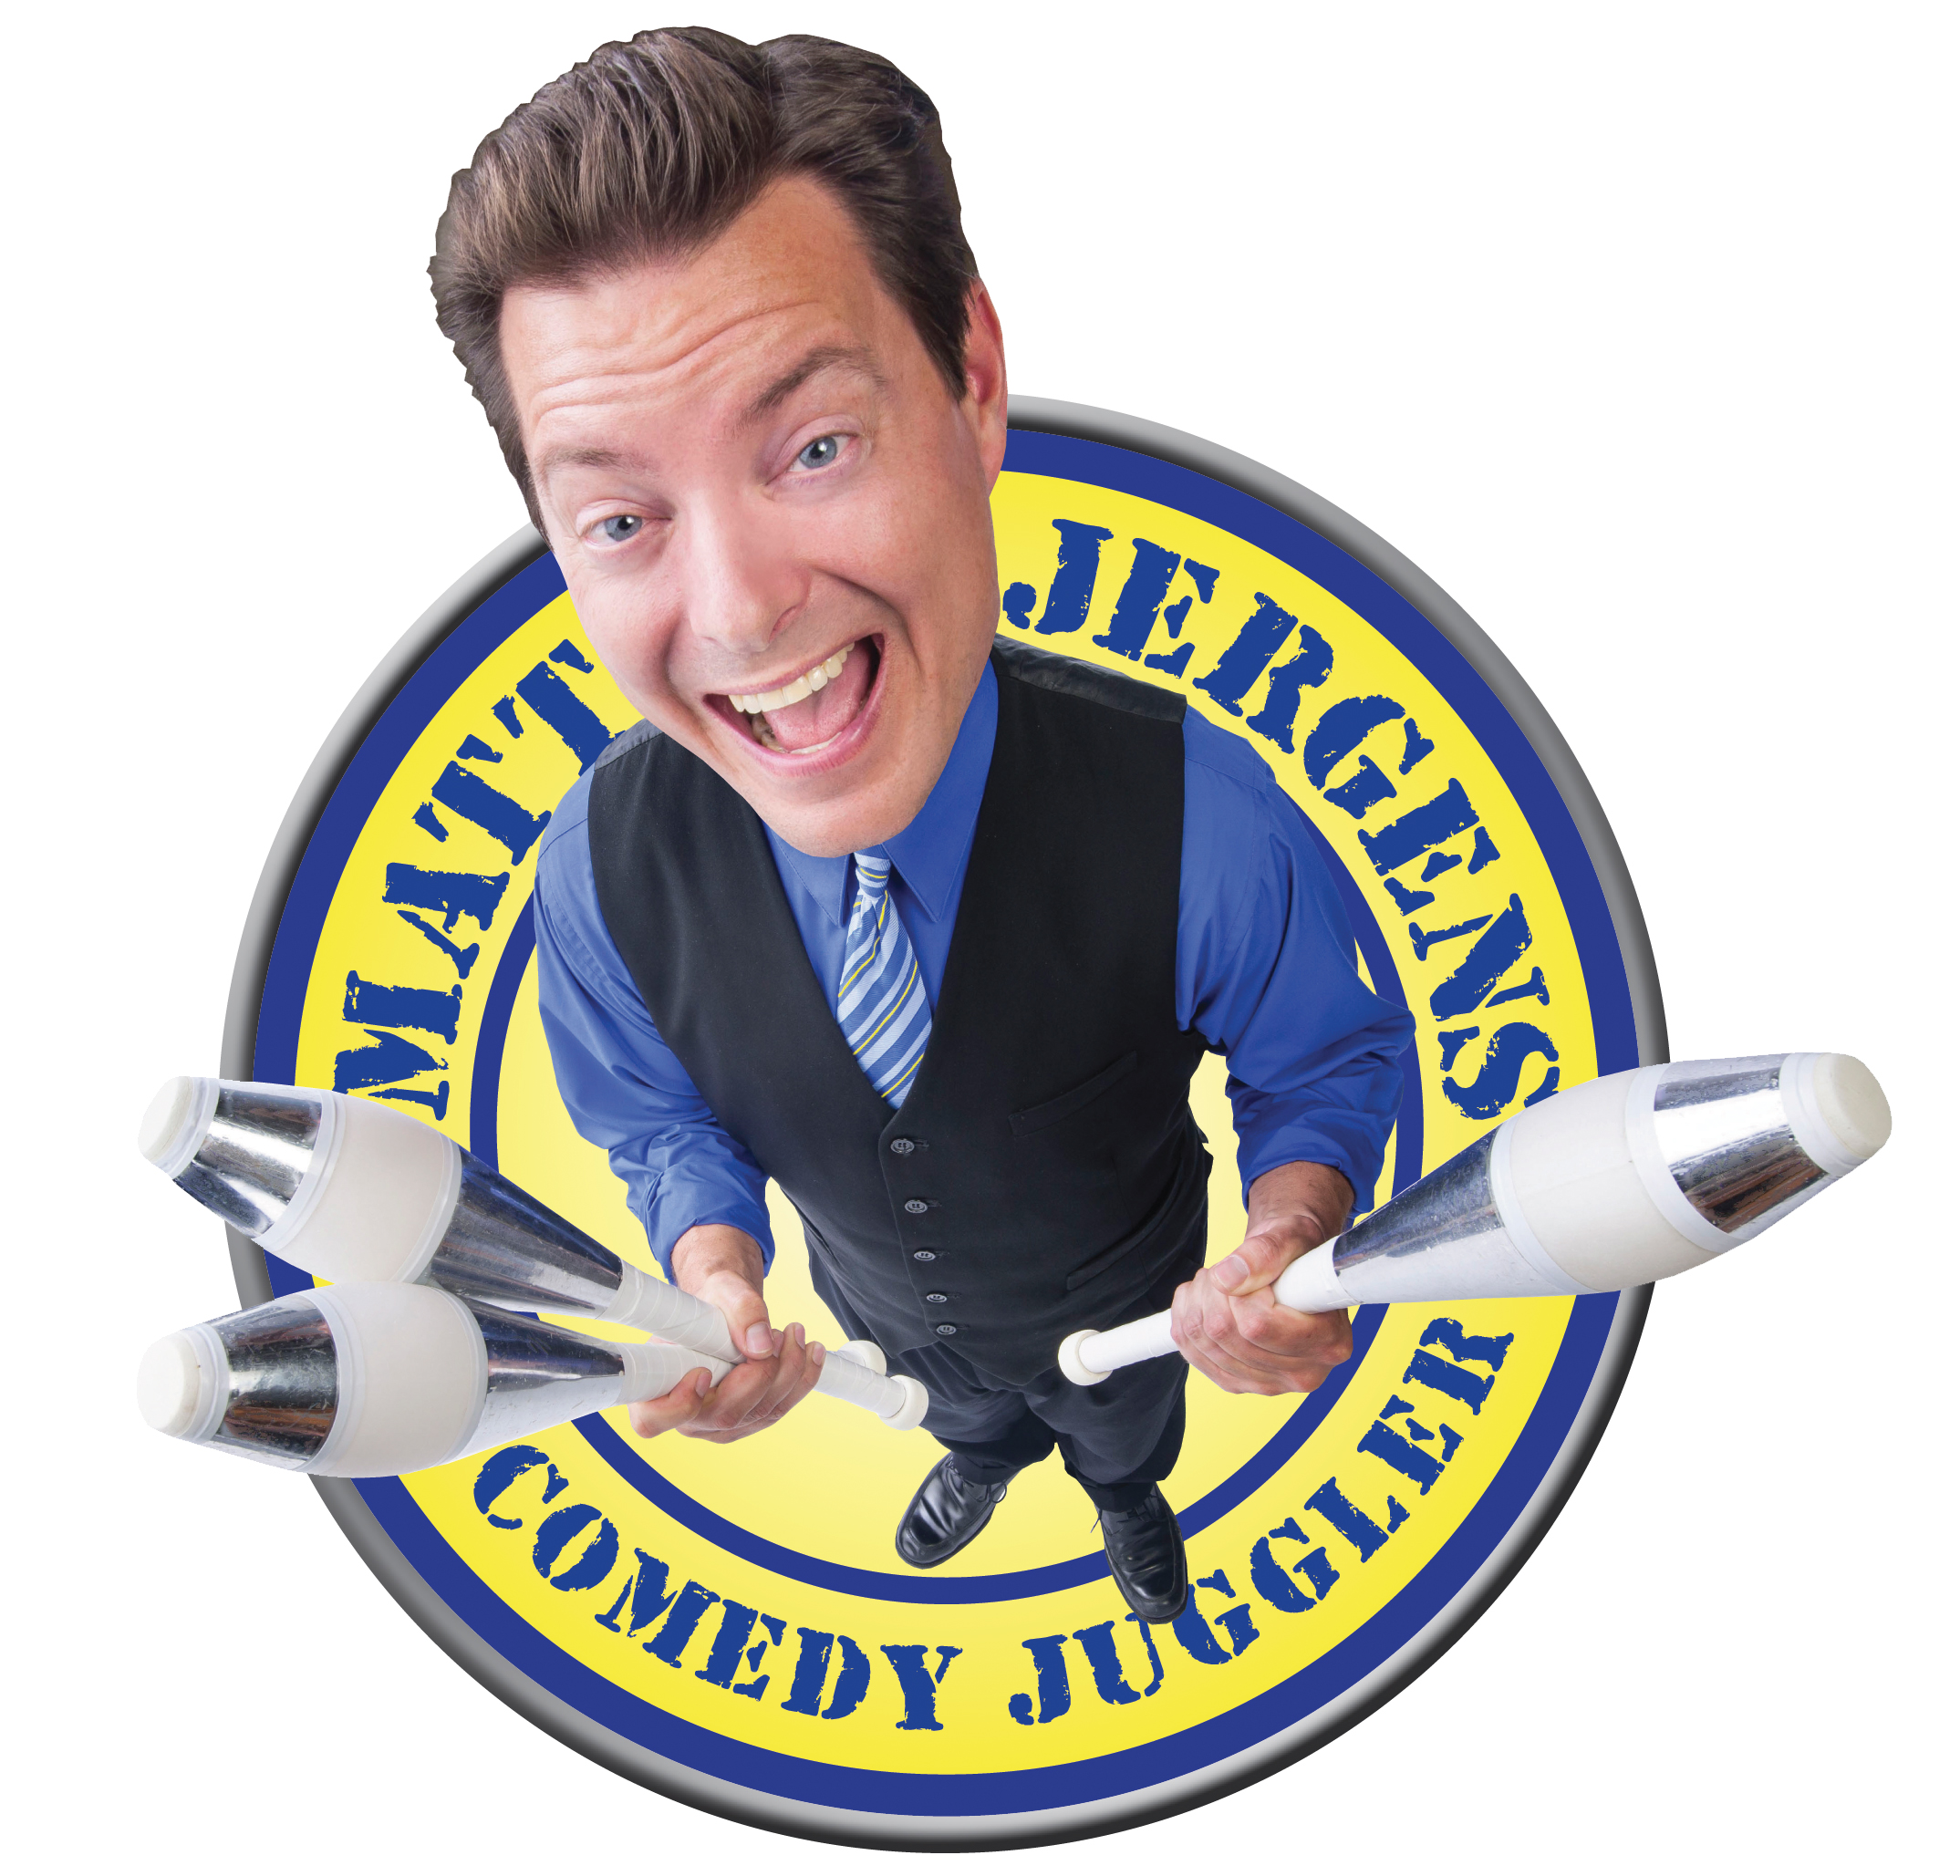 Matt Jergens Comedy Juggler logo with photo of matt holding juggling pins